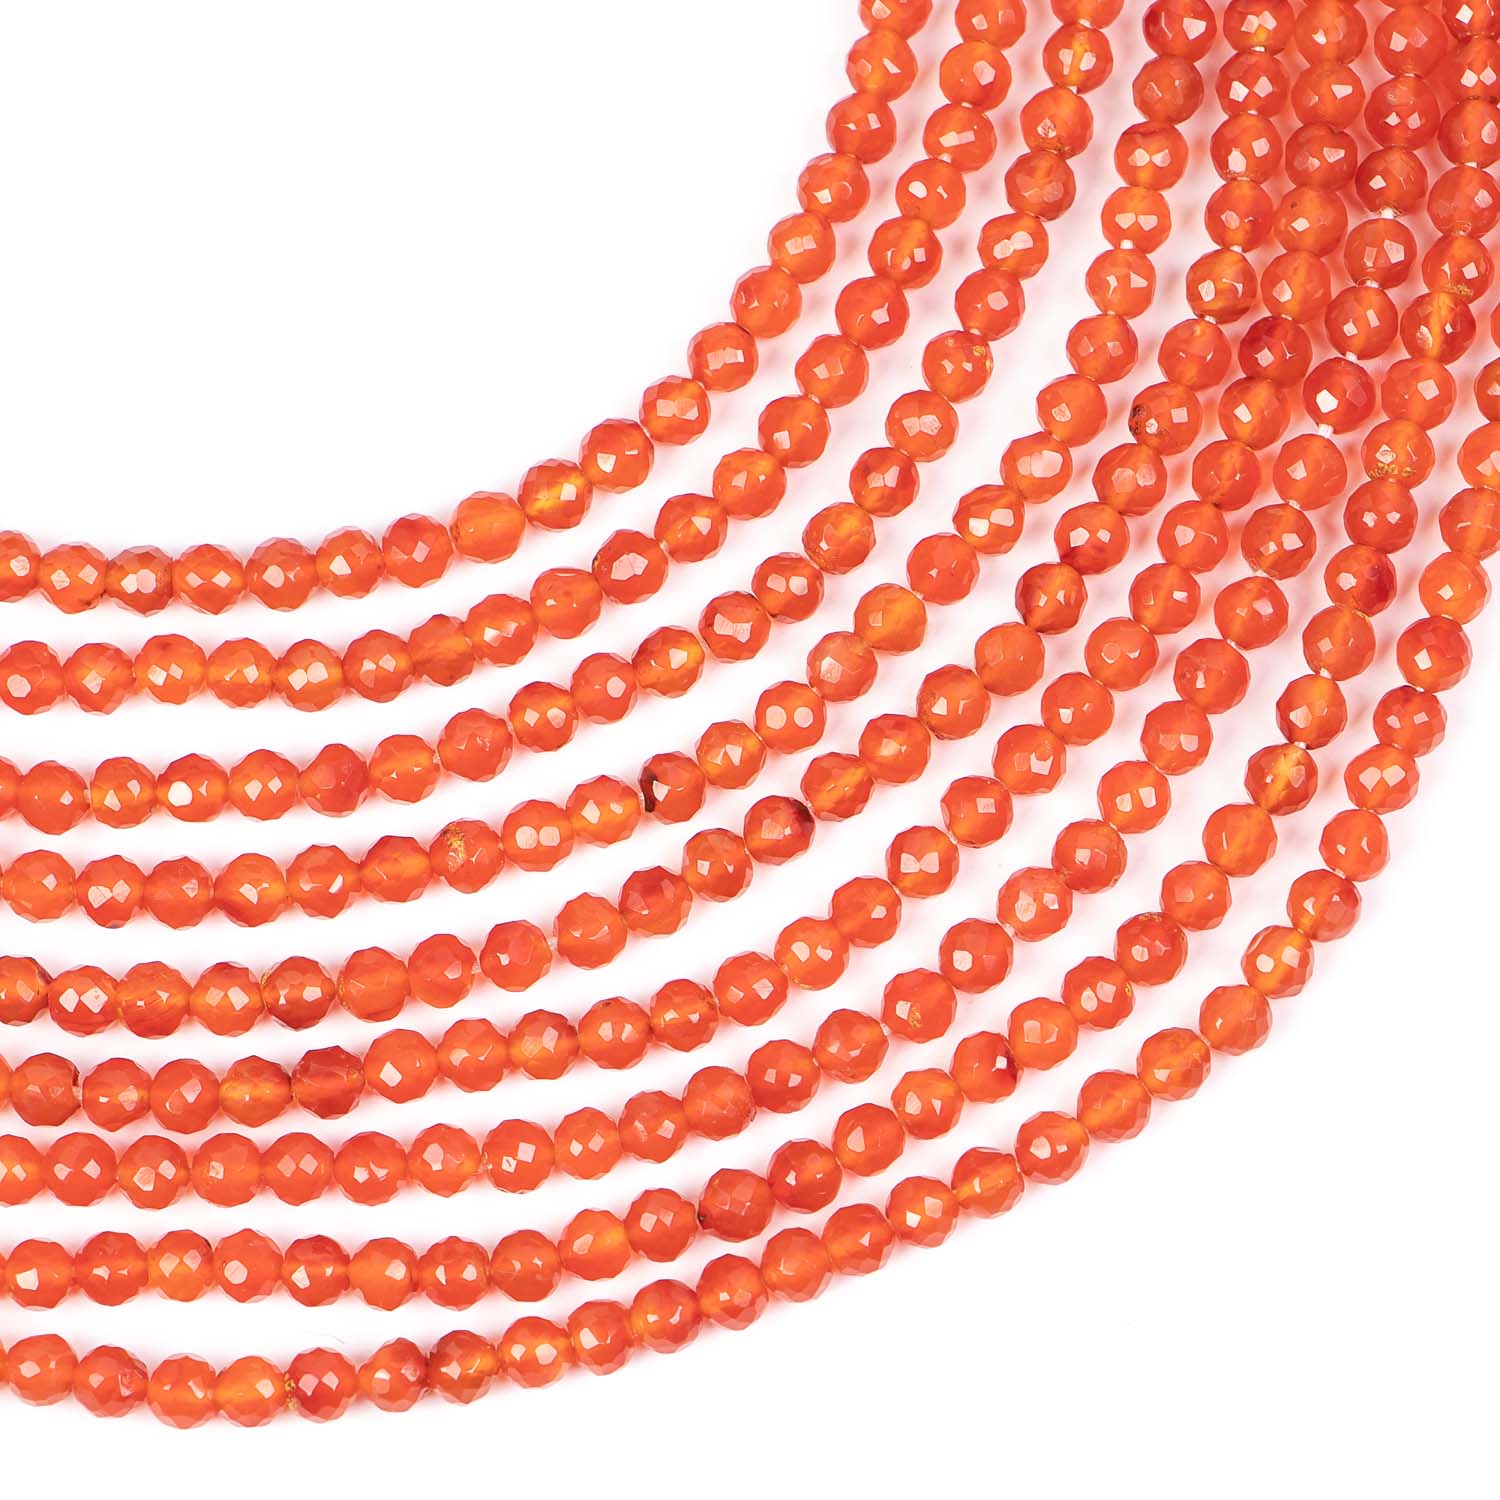 Carnelian Faceted Round Shape Gemstone Beads